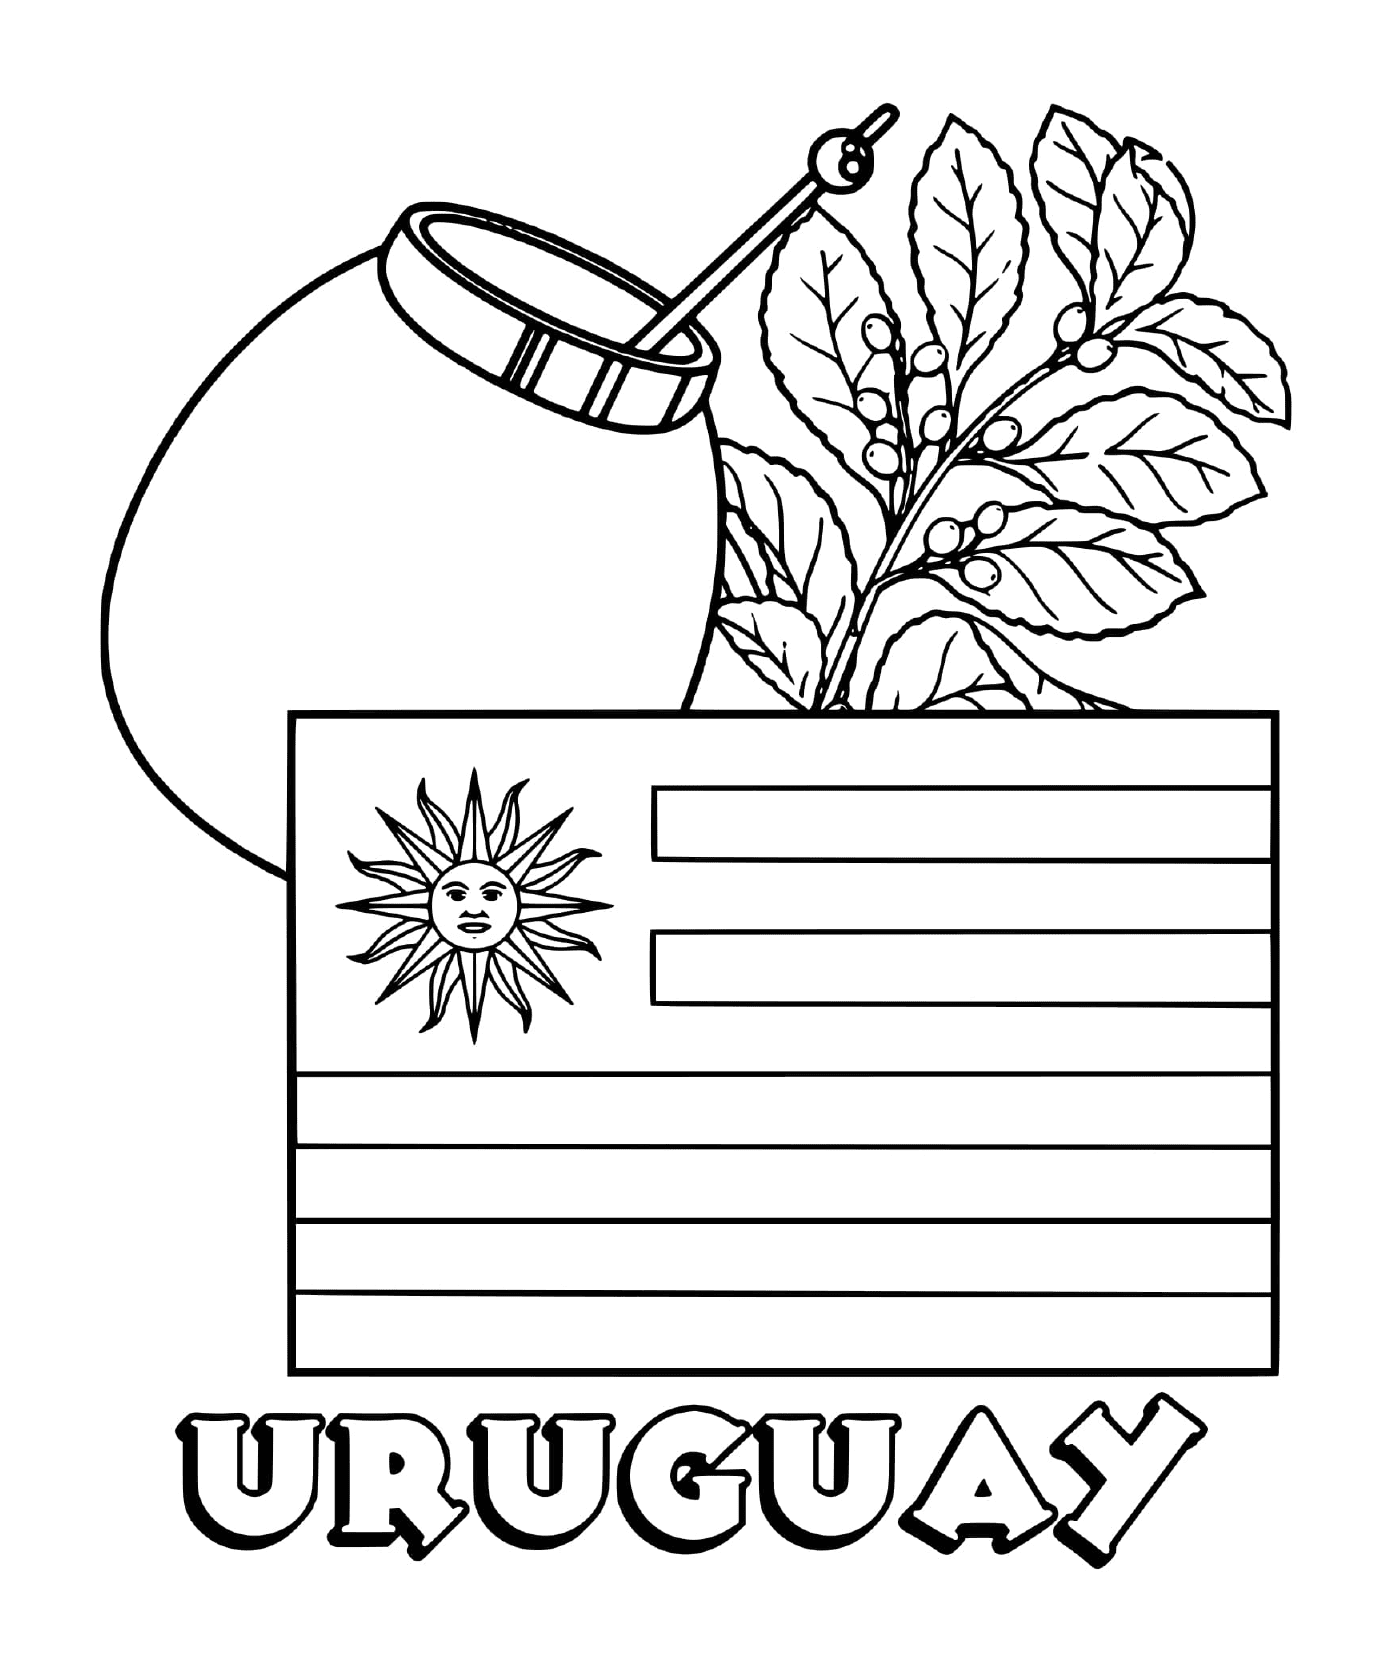 coloriage uruguay drapeau yerba mate